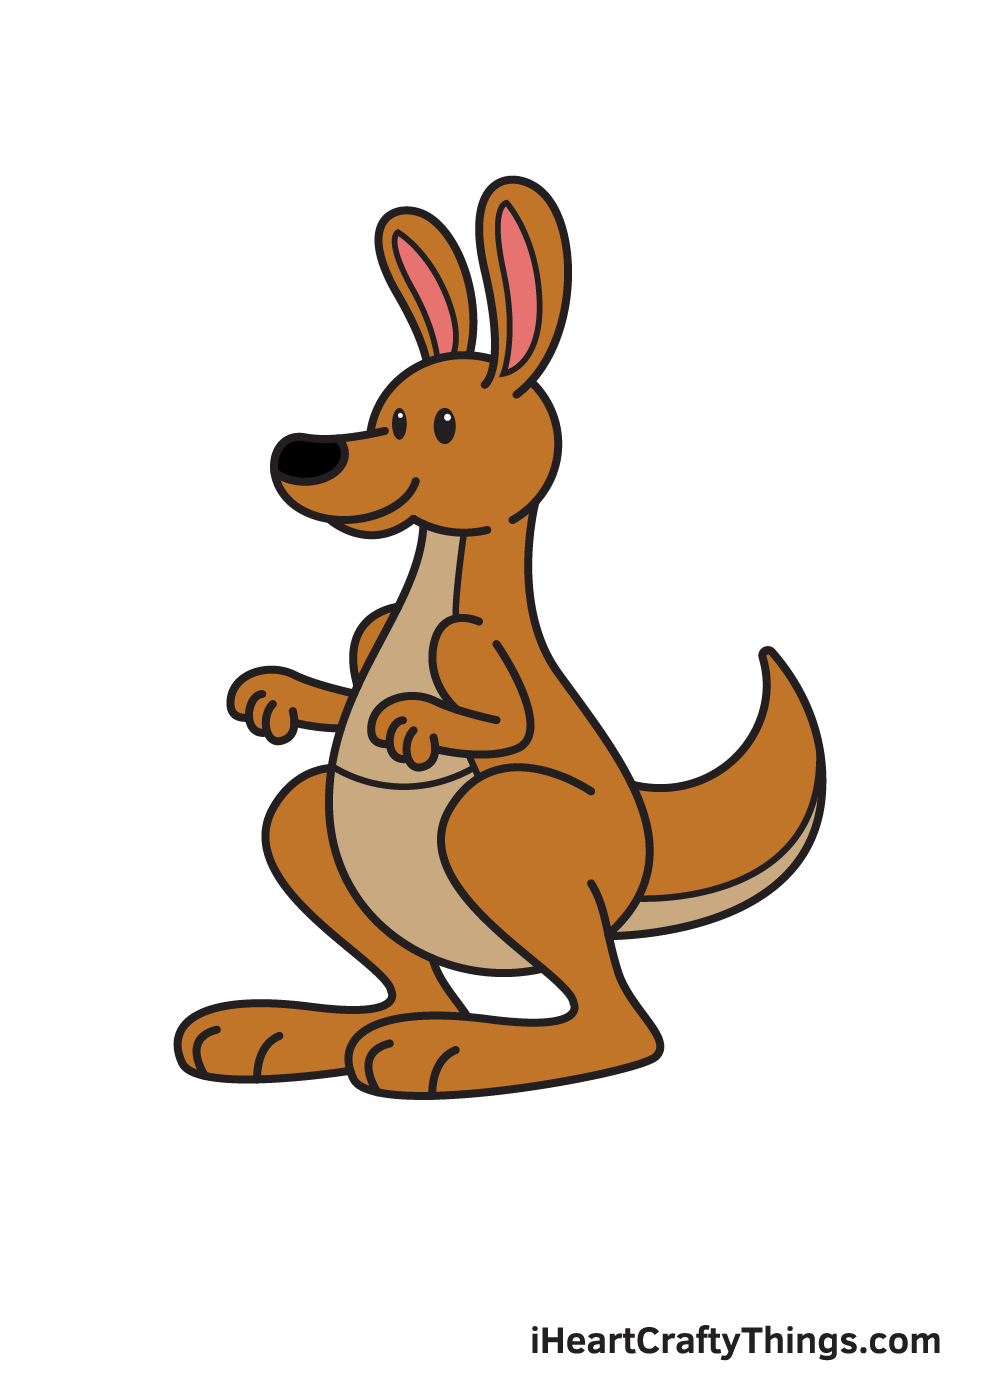 kangaroo drawing 9 steps